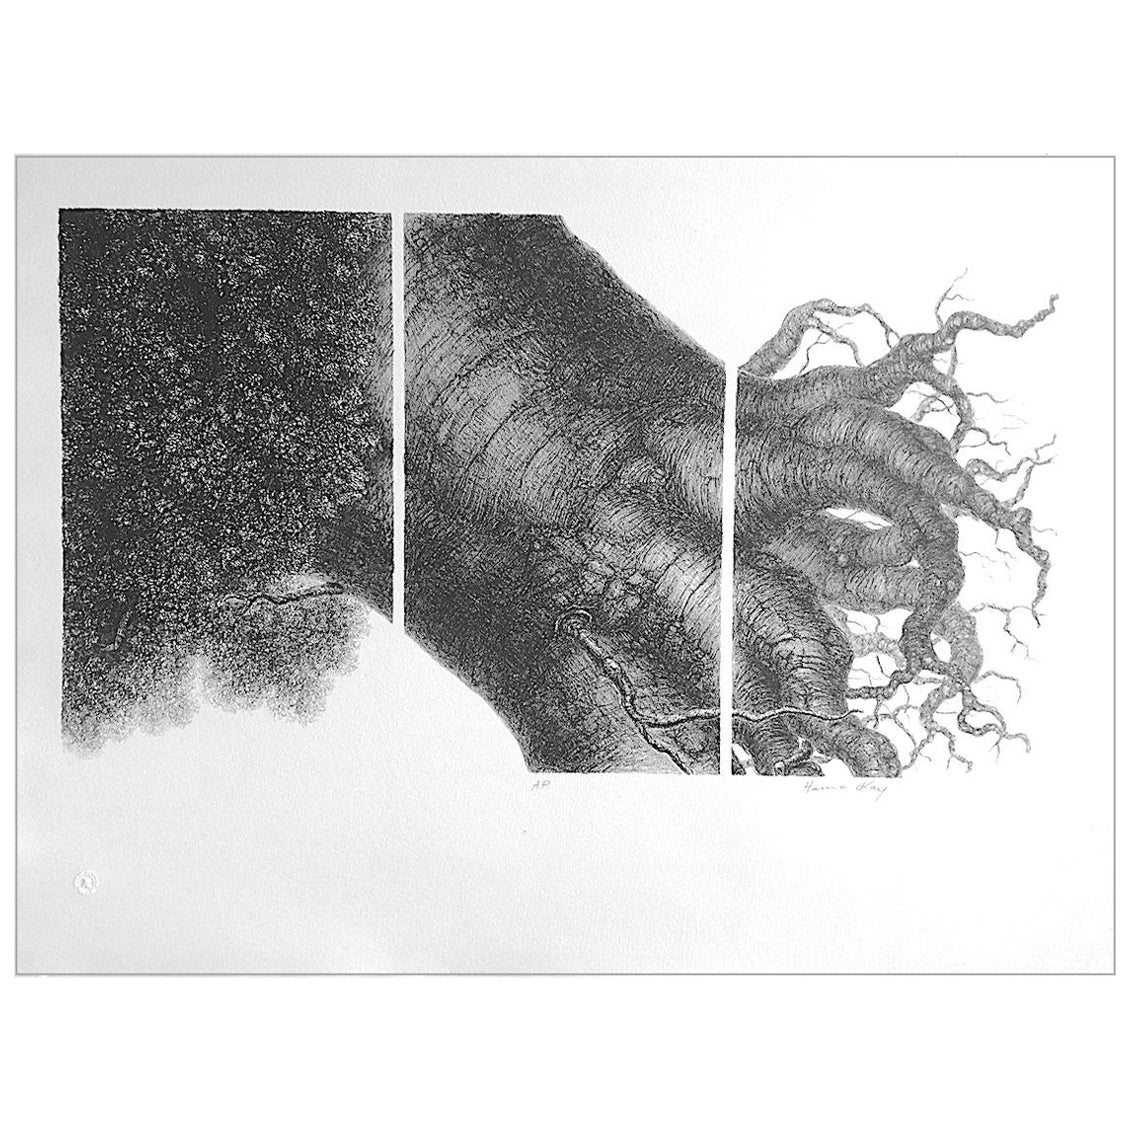 Hanna Kay Still-Life Print - MIGHTY TREE I  Signed Stone Lithograph, Tree Portrait, Surreal Botanical Drawing